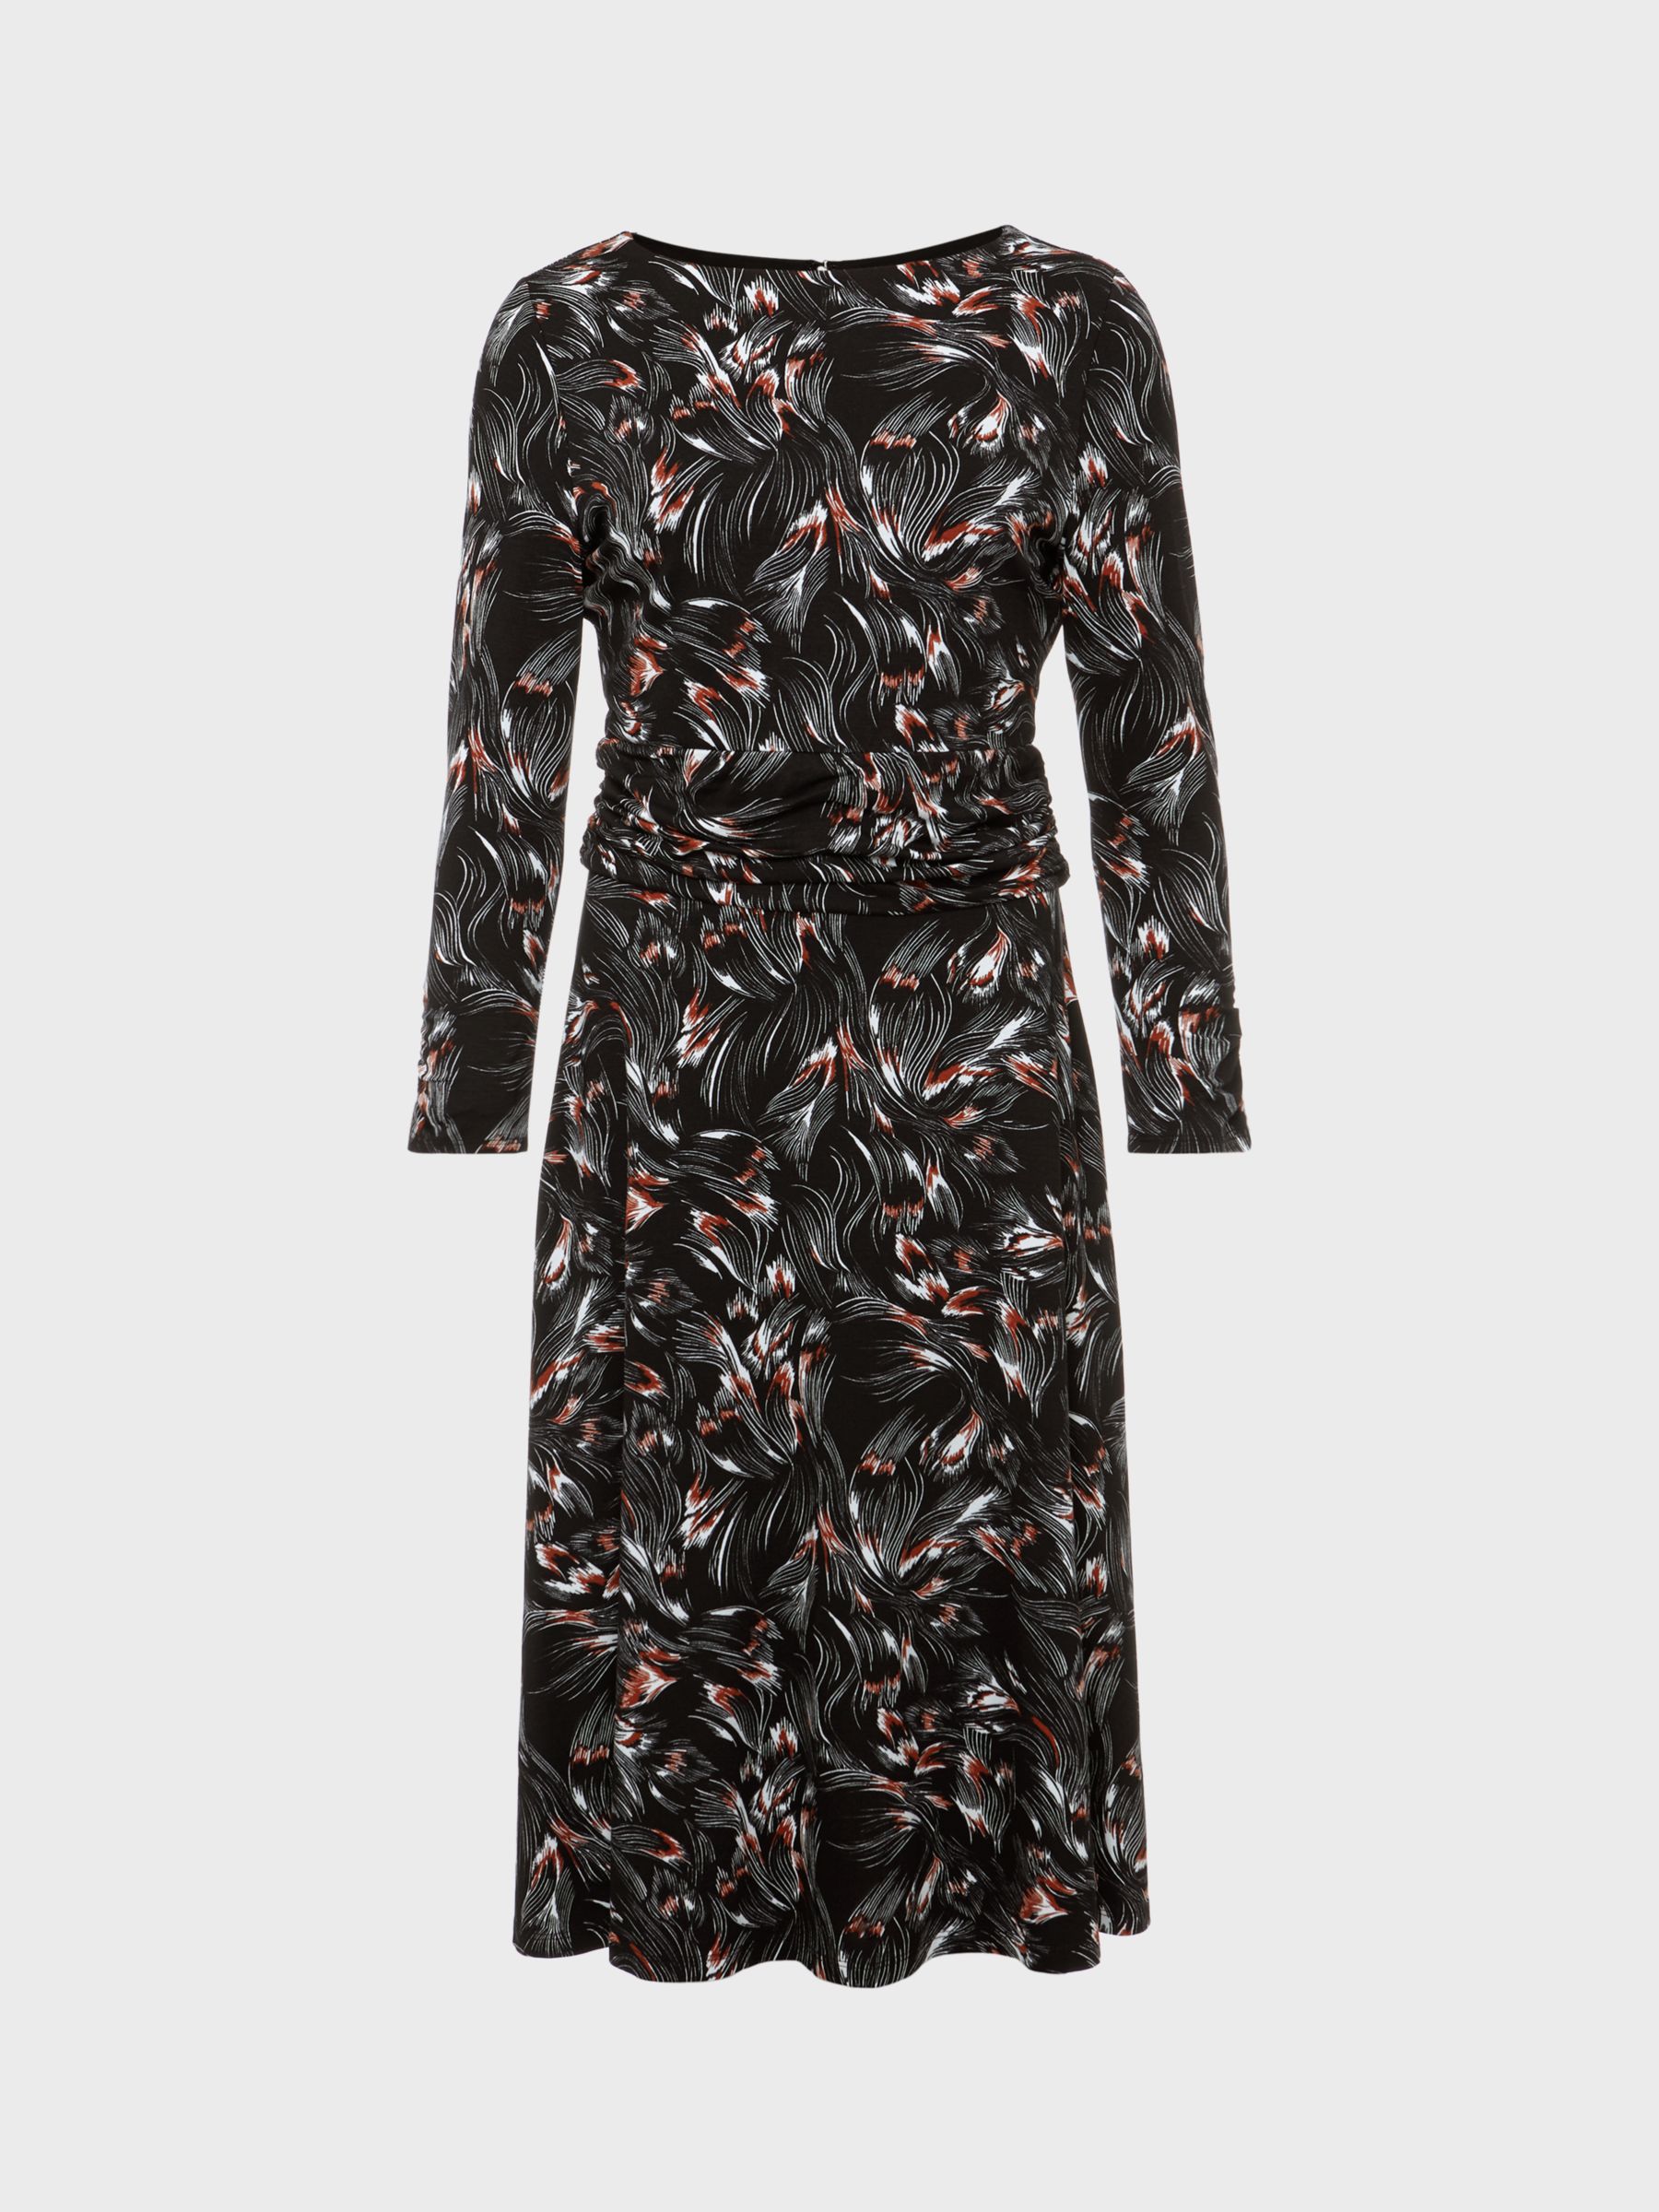 Hobbs Nala Abstract Print Jersey Dress, Black/Multi, 6